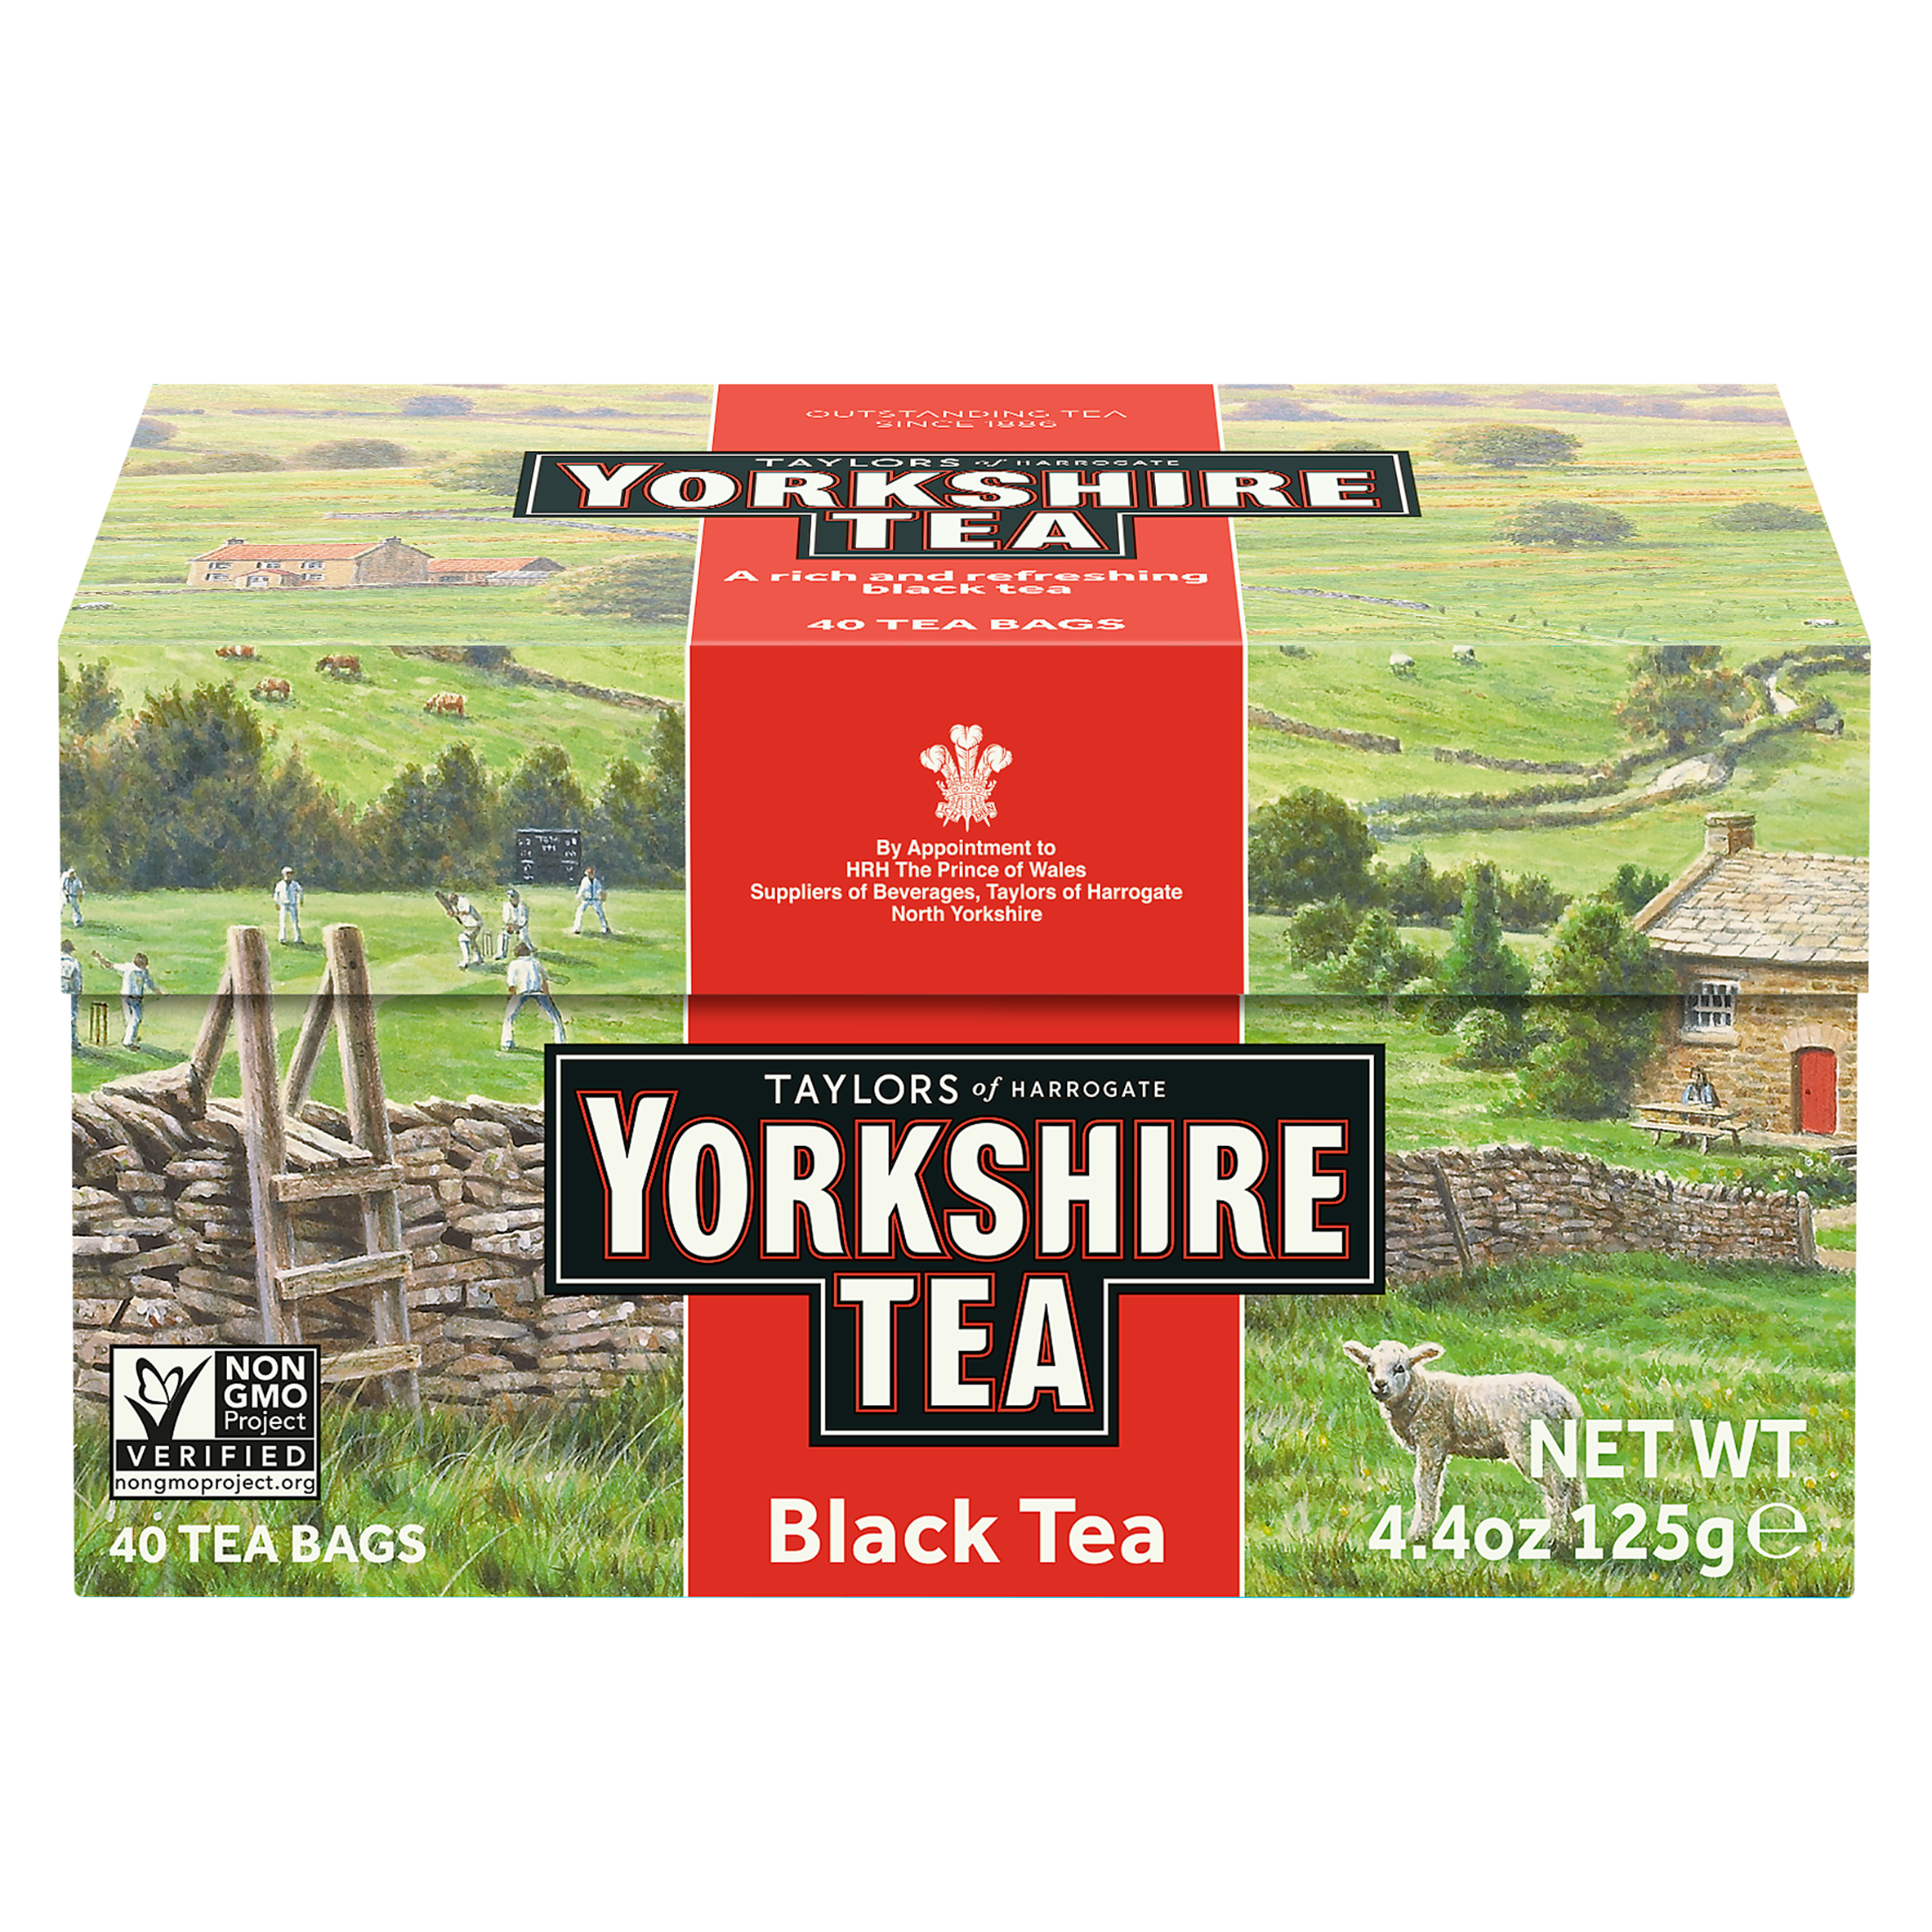 Yorkshire Red Tea